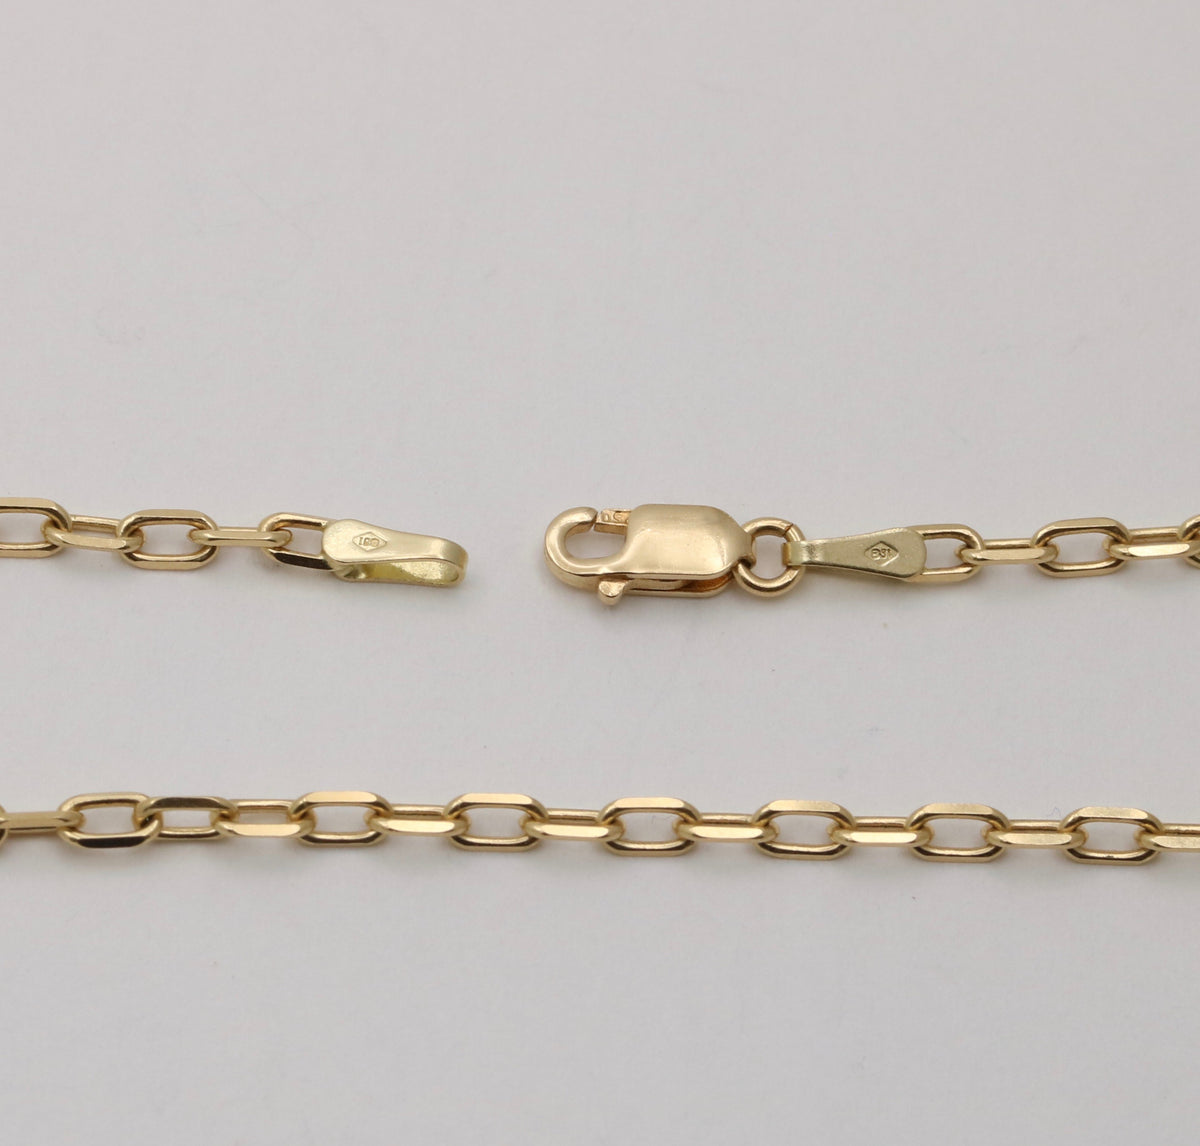 Vintage 18K Gold Biker Chain, 22” Long